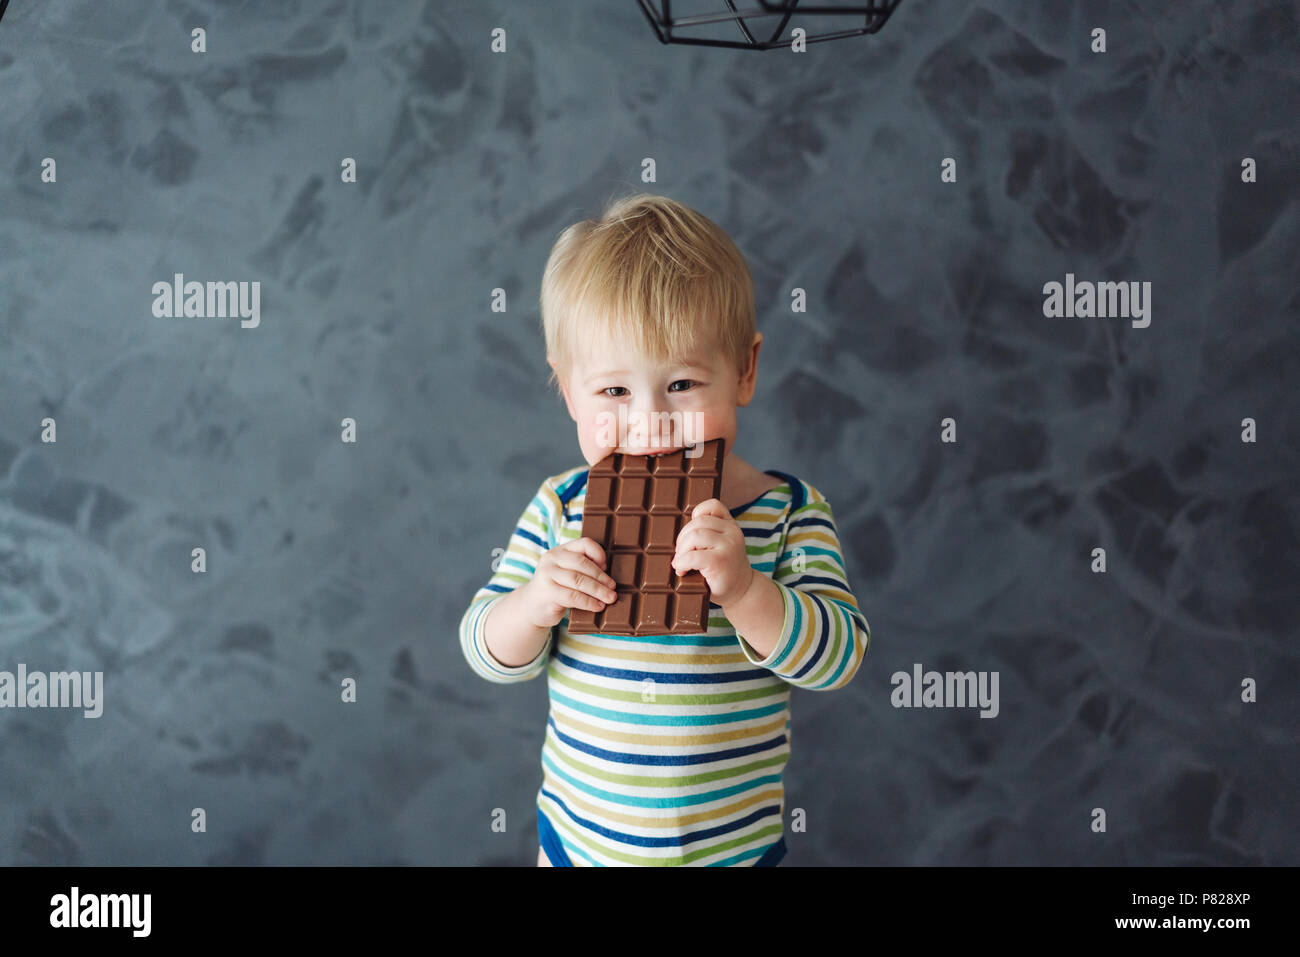 Portrait of an littel boy eating chocolate Stock Photo